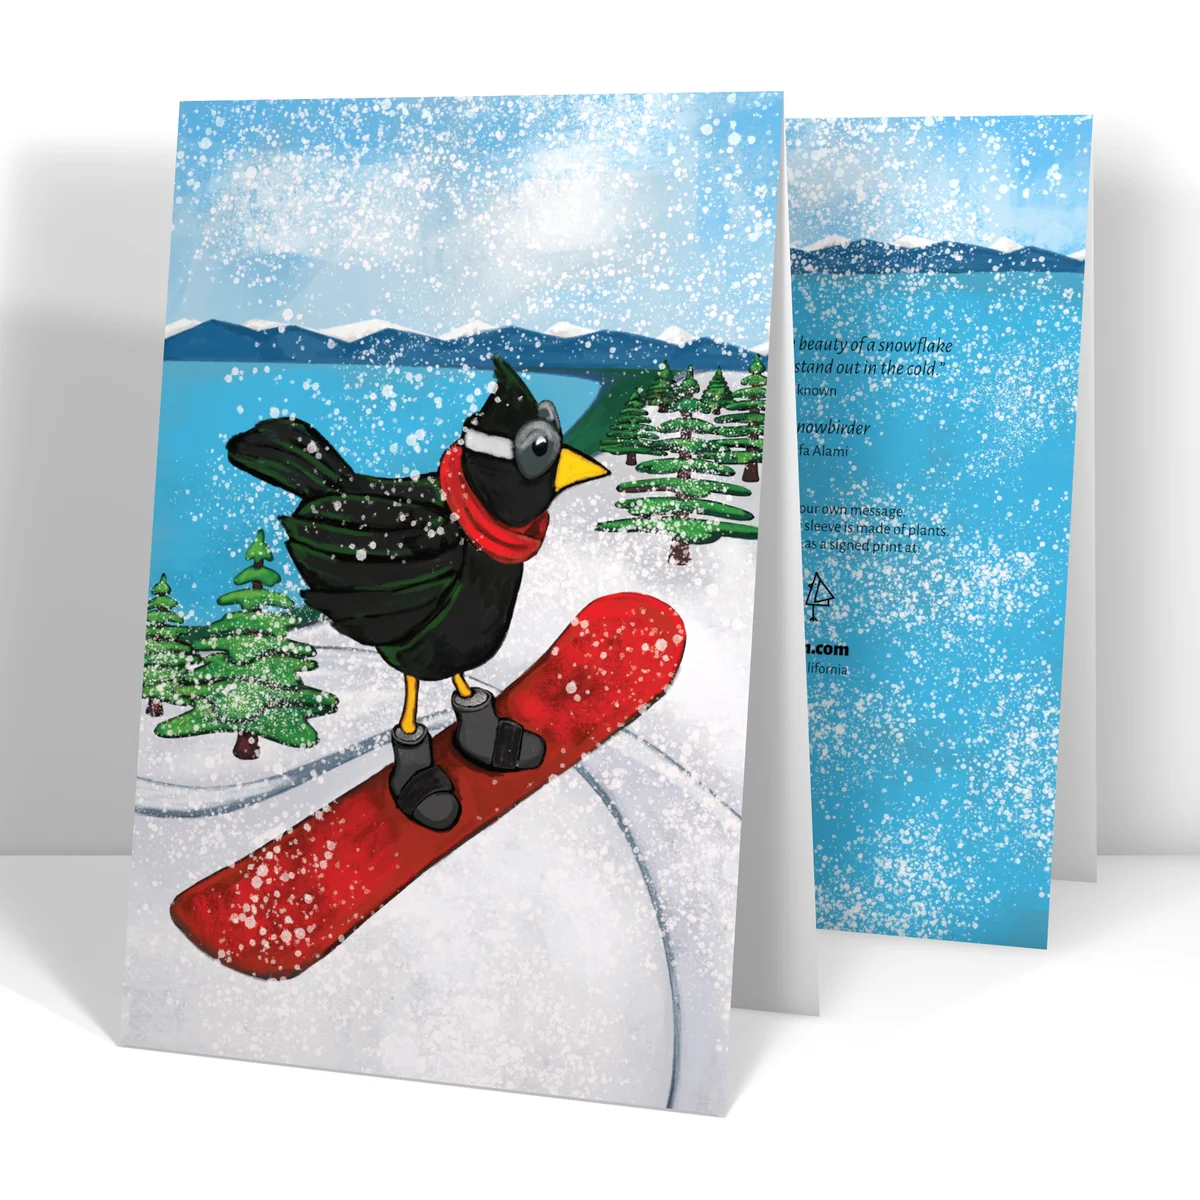 Painting of a black bird snowboarding.